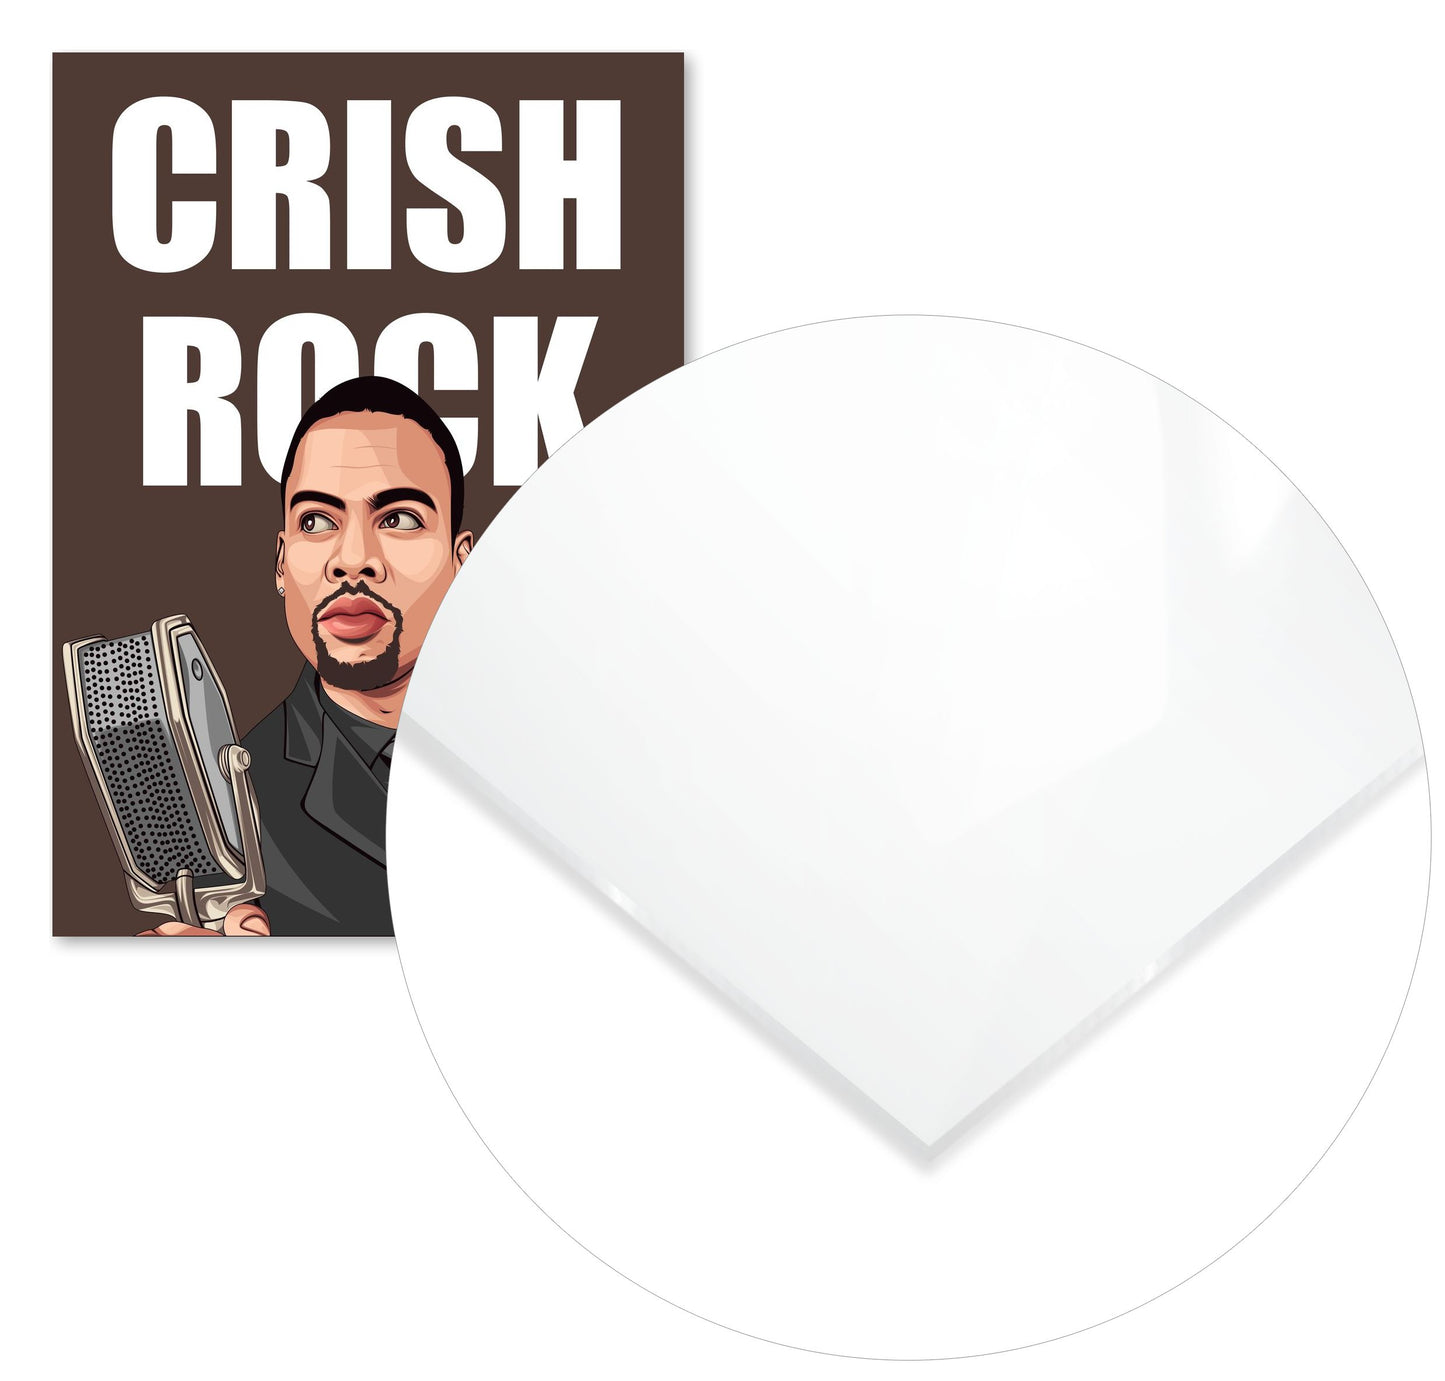 Crish Rock - @AsranVektor